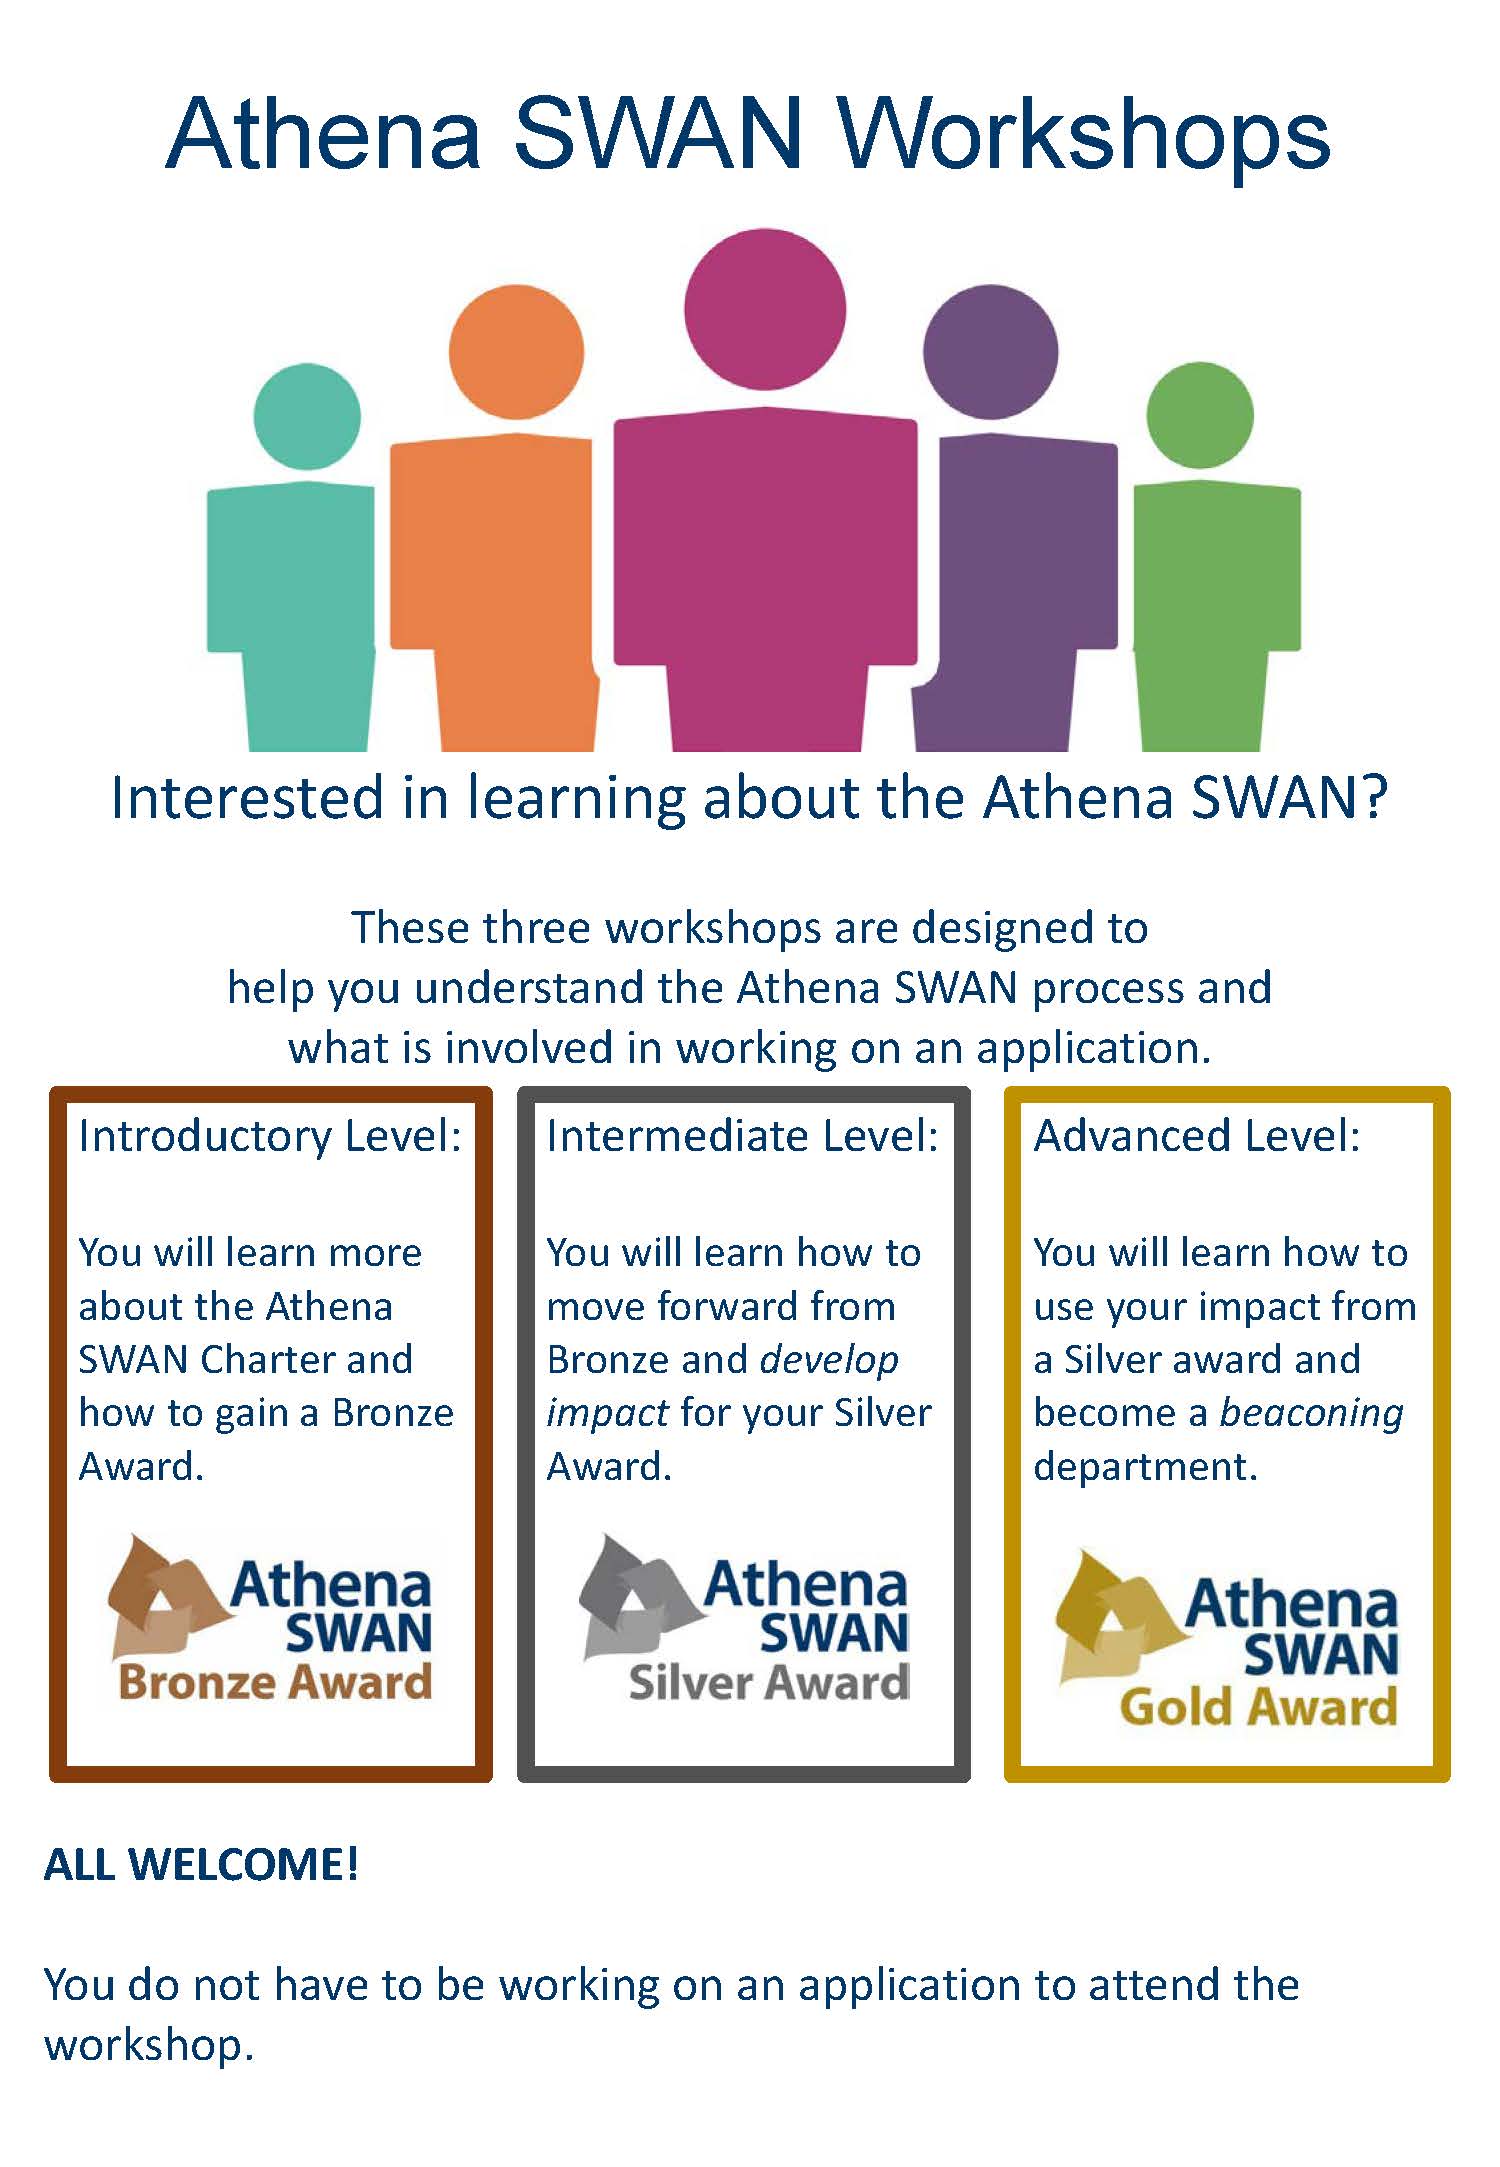 poster advertising Athena SWAN workshops